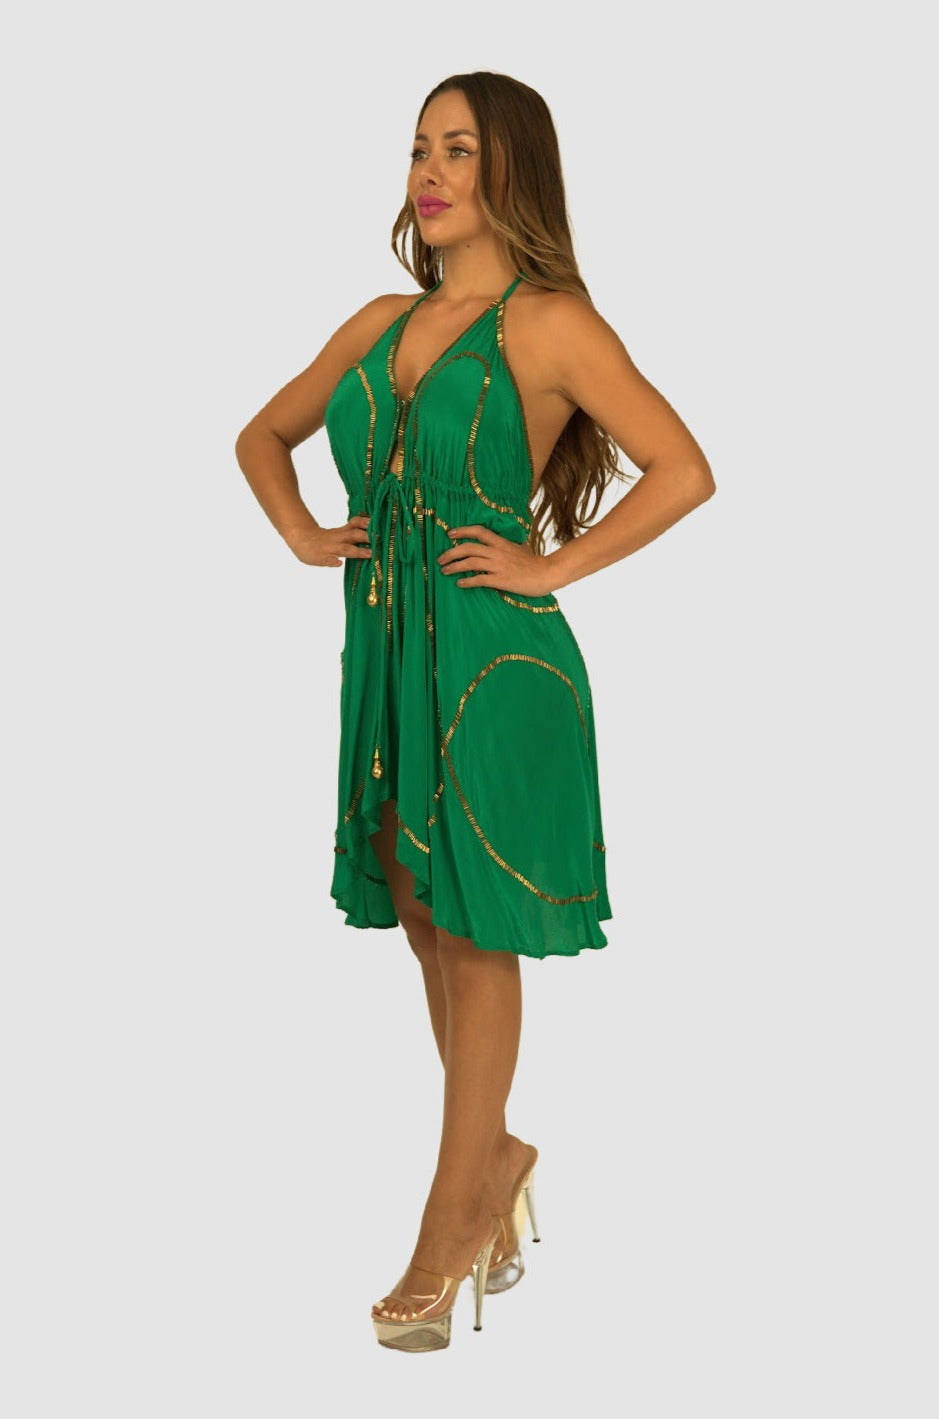 JSQUAD Emerald W Gold Dress